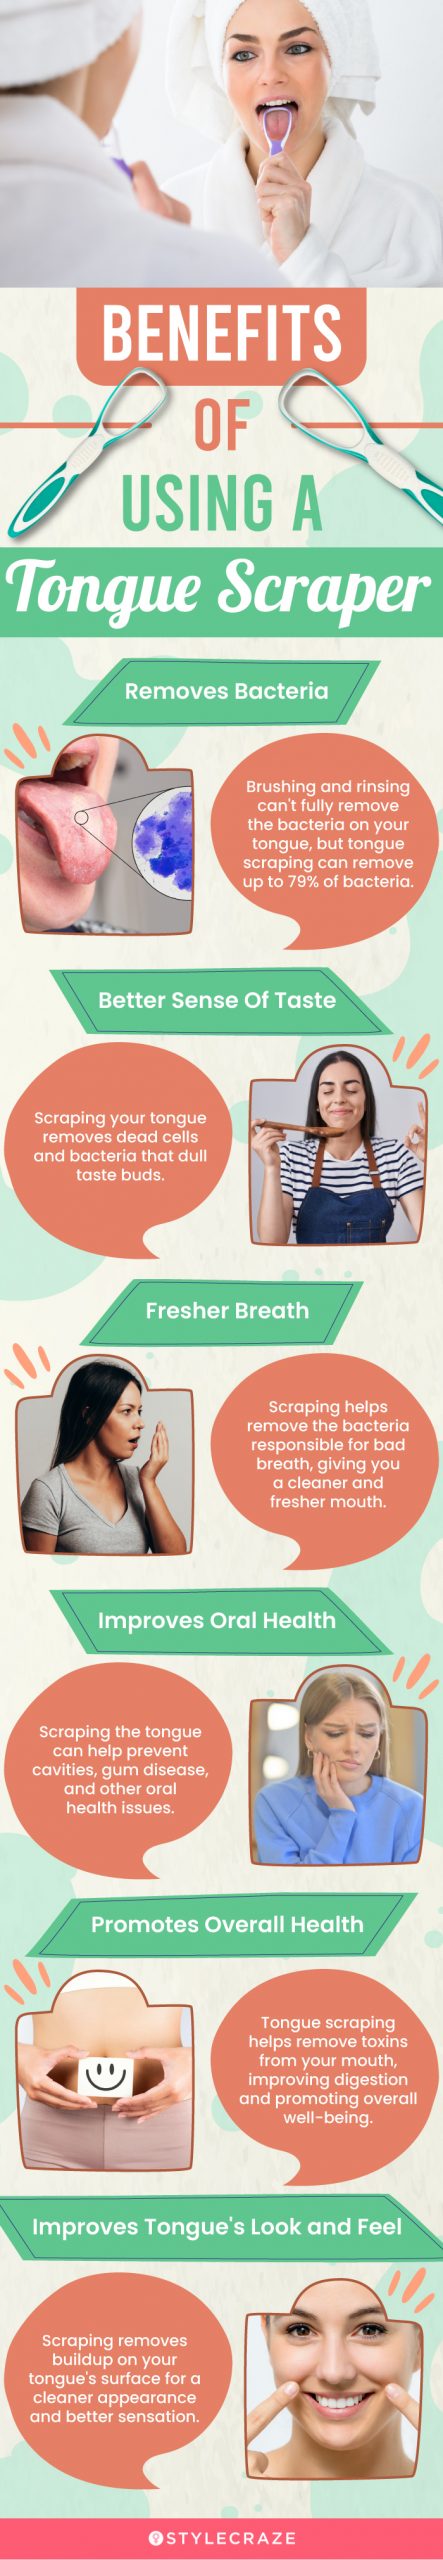 Benefits Of Using A Tongue Scraper (infographic)